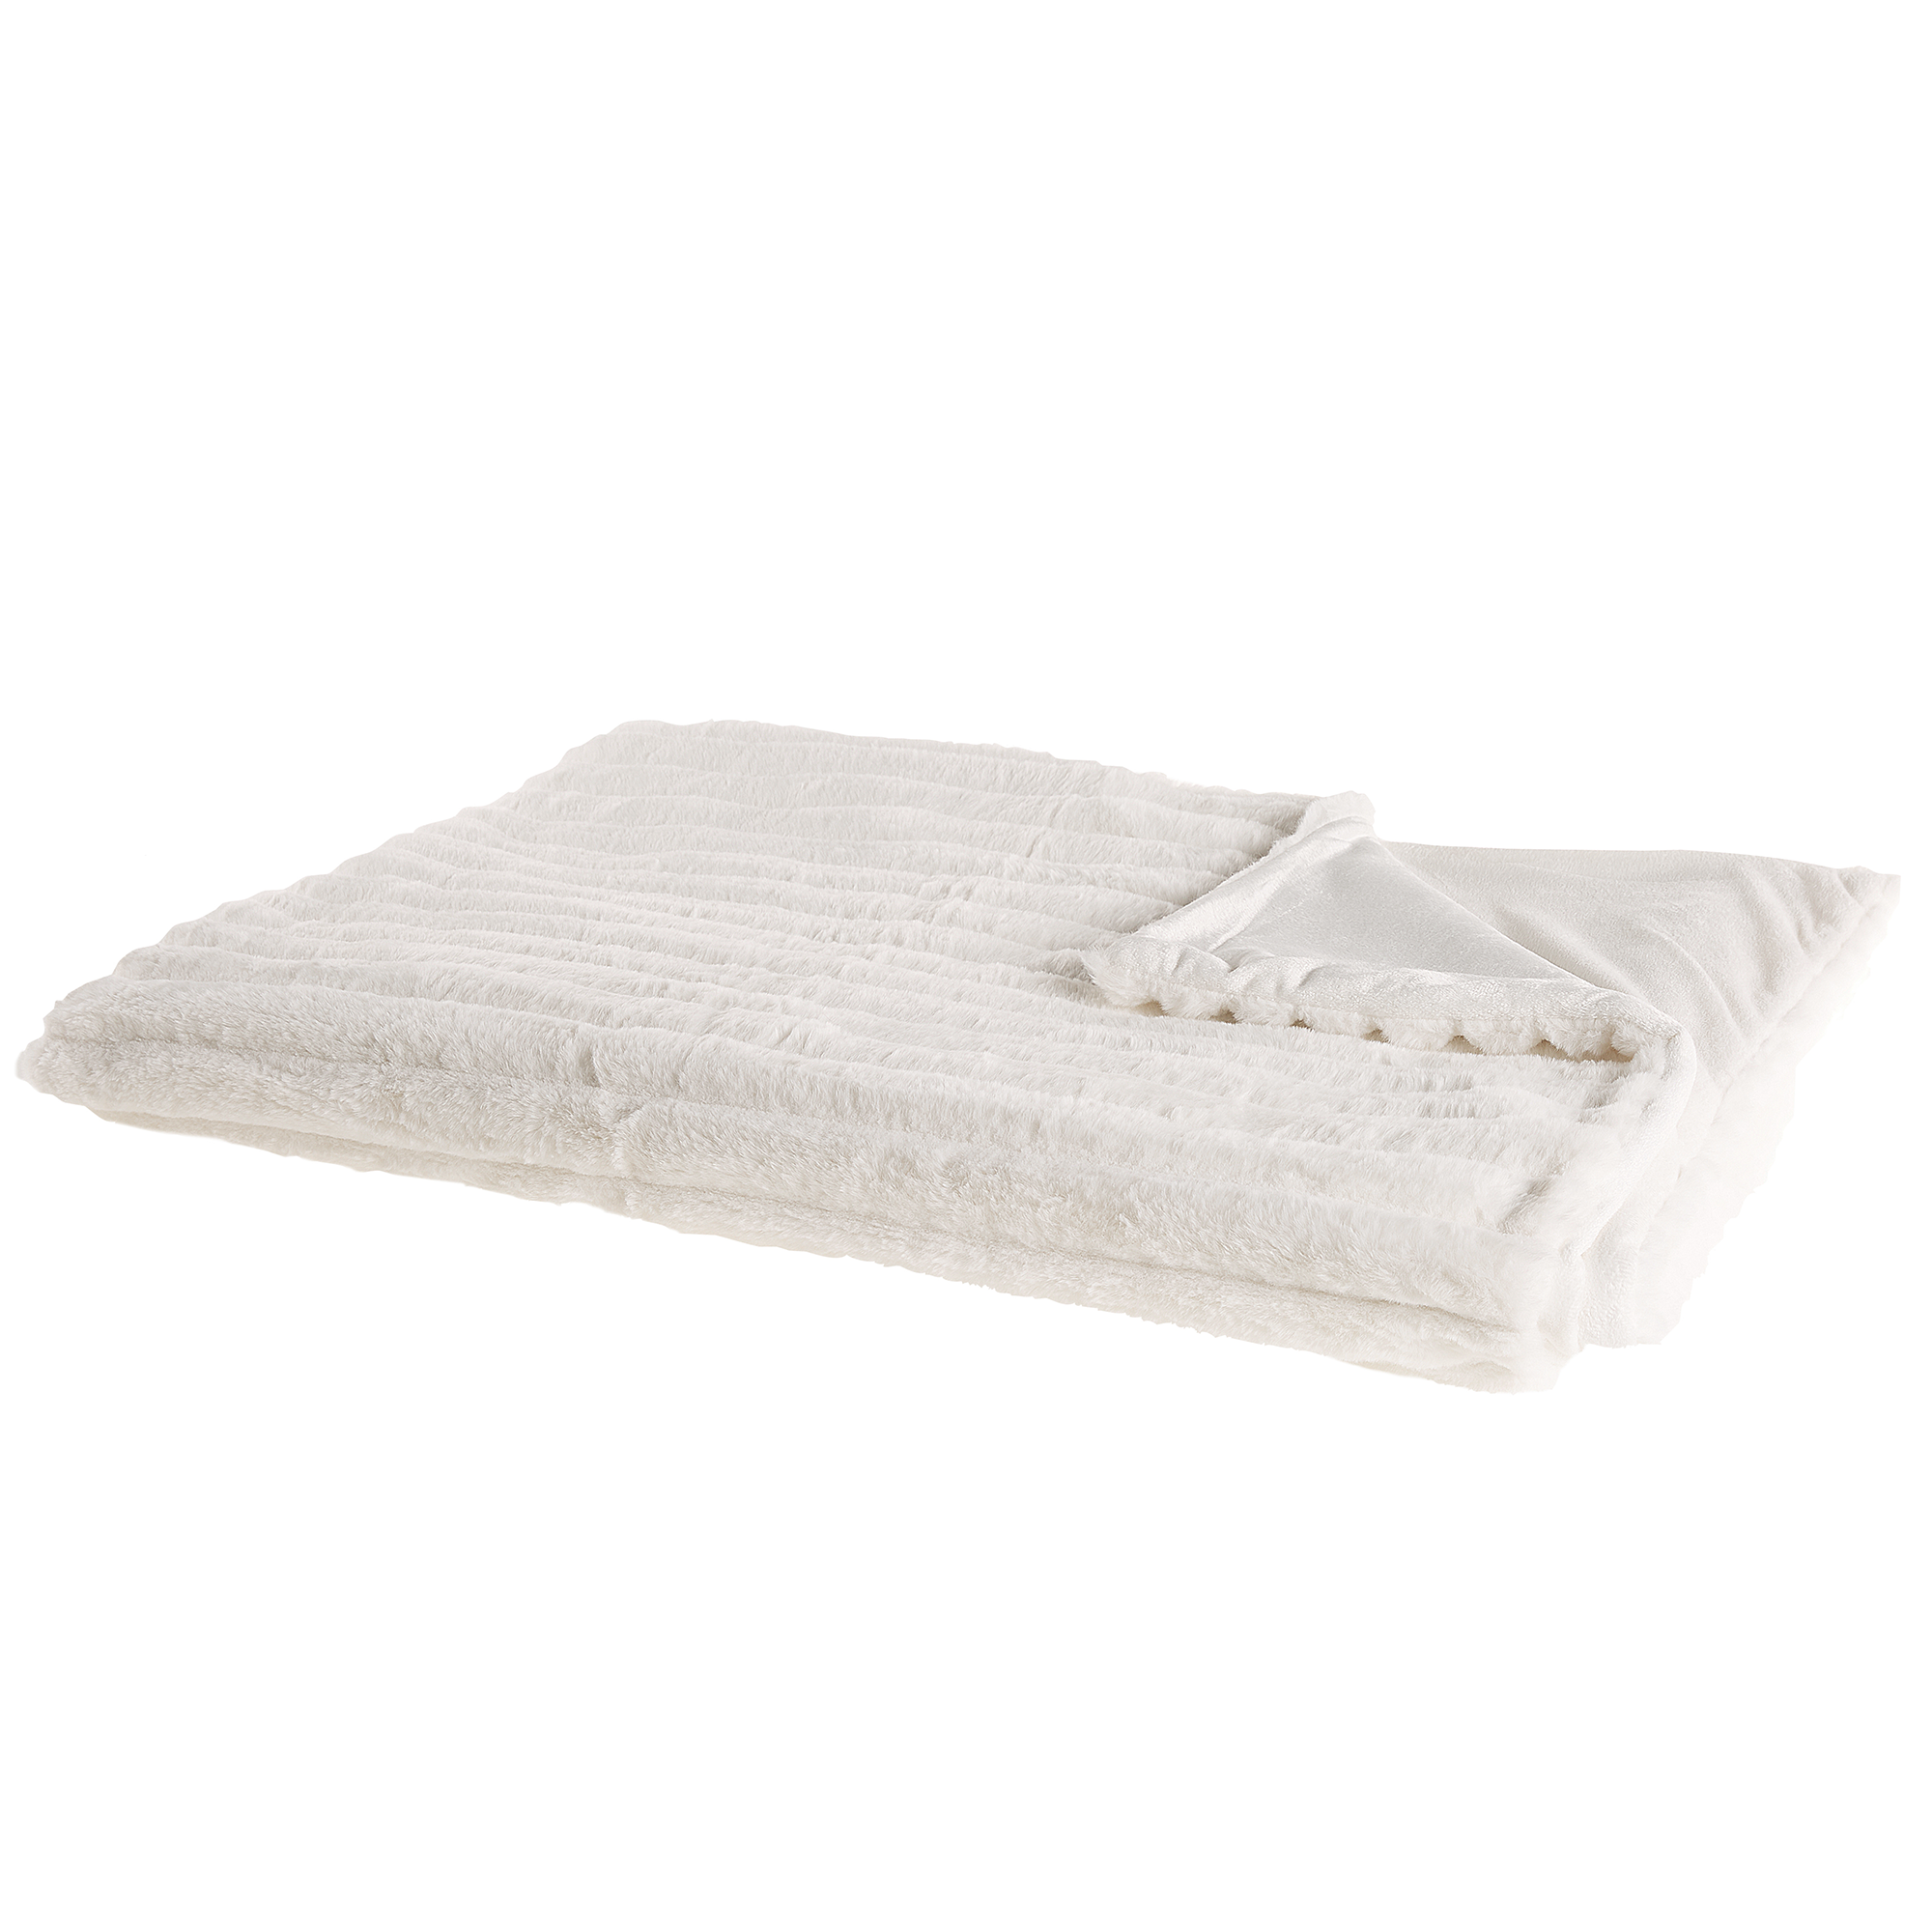 Beliani Blanket White Polyester Fabric 150 x 200 cm Decorative Throw Living Room Scandinavian Decor